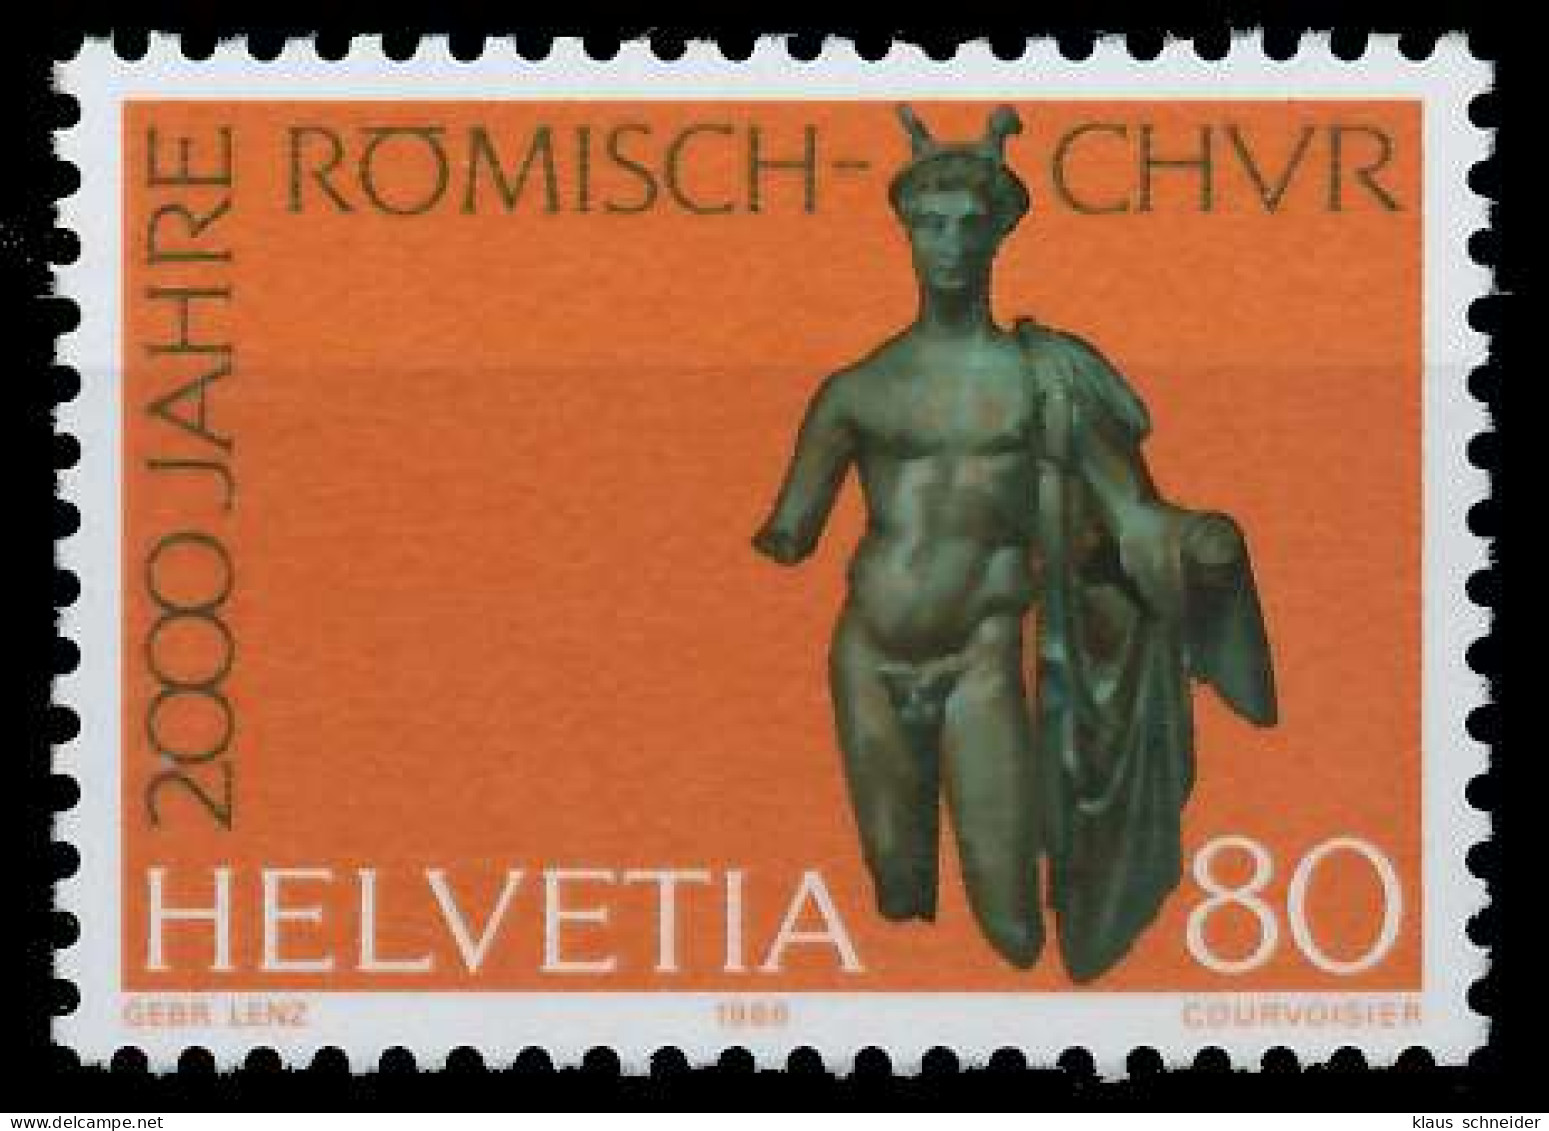 SCHWEIZ 1986 Nr 1310 Postfrisch X66EA6E - Unused Stamps